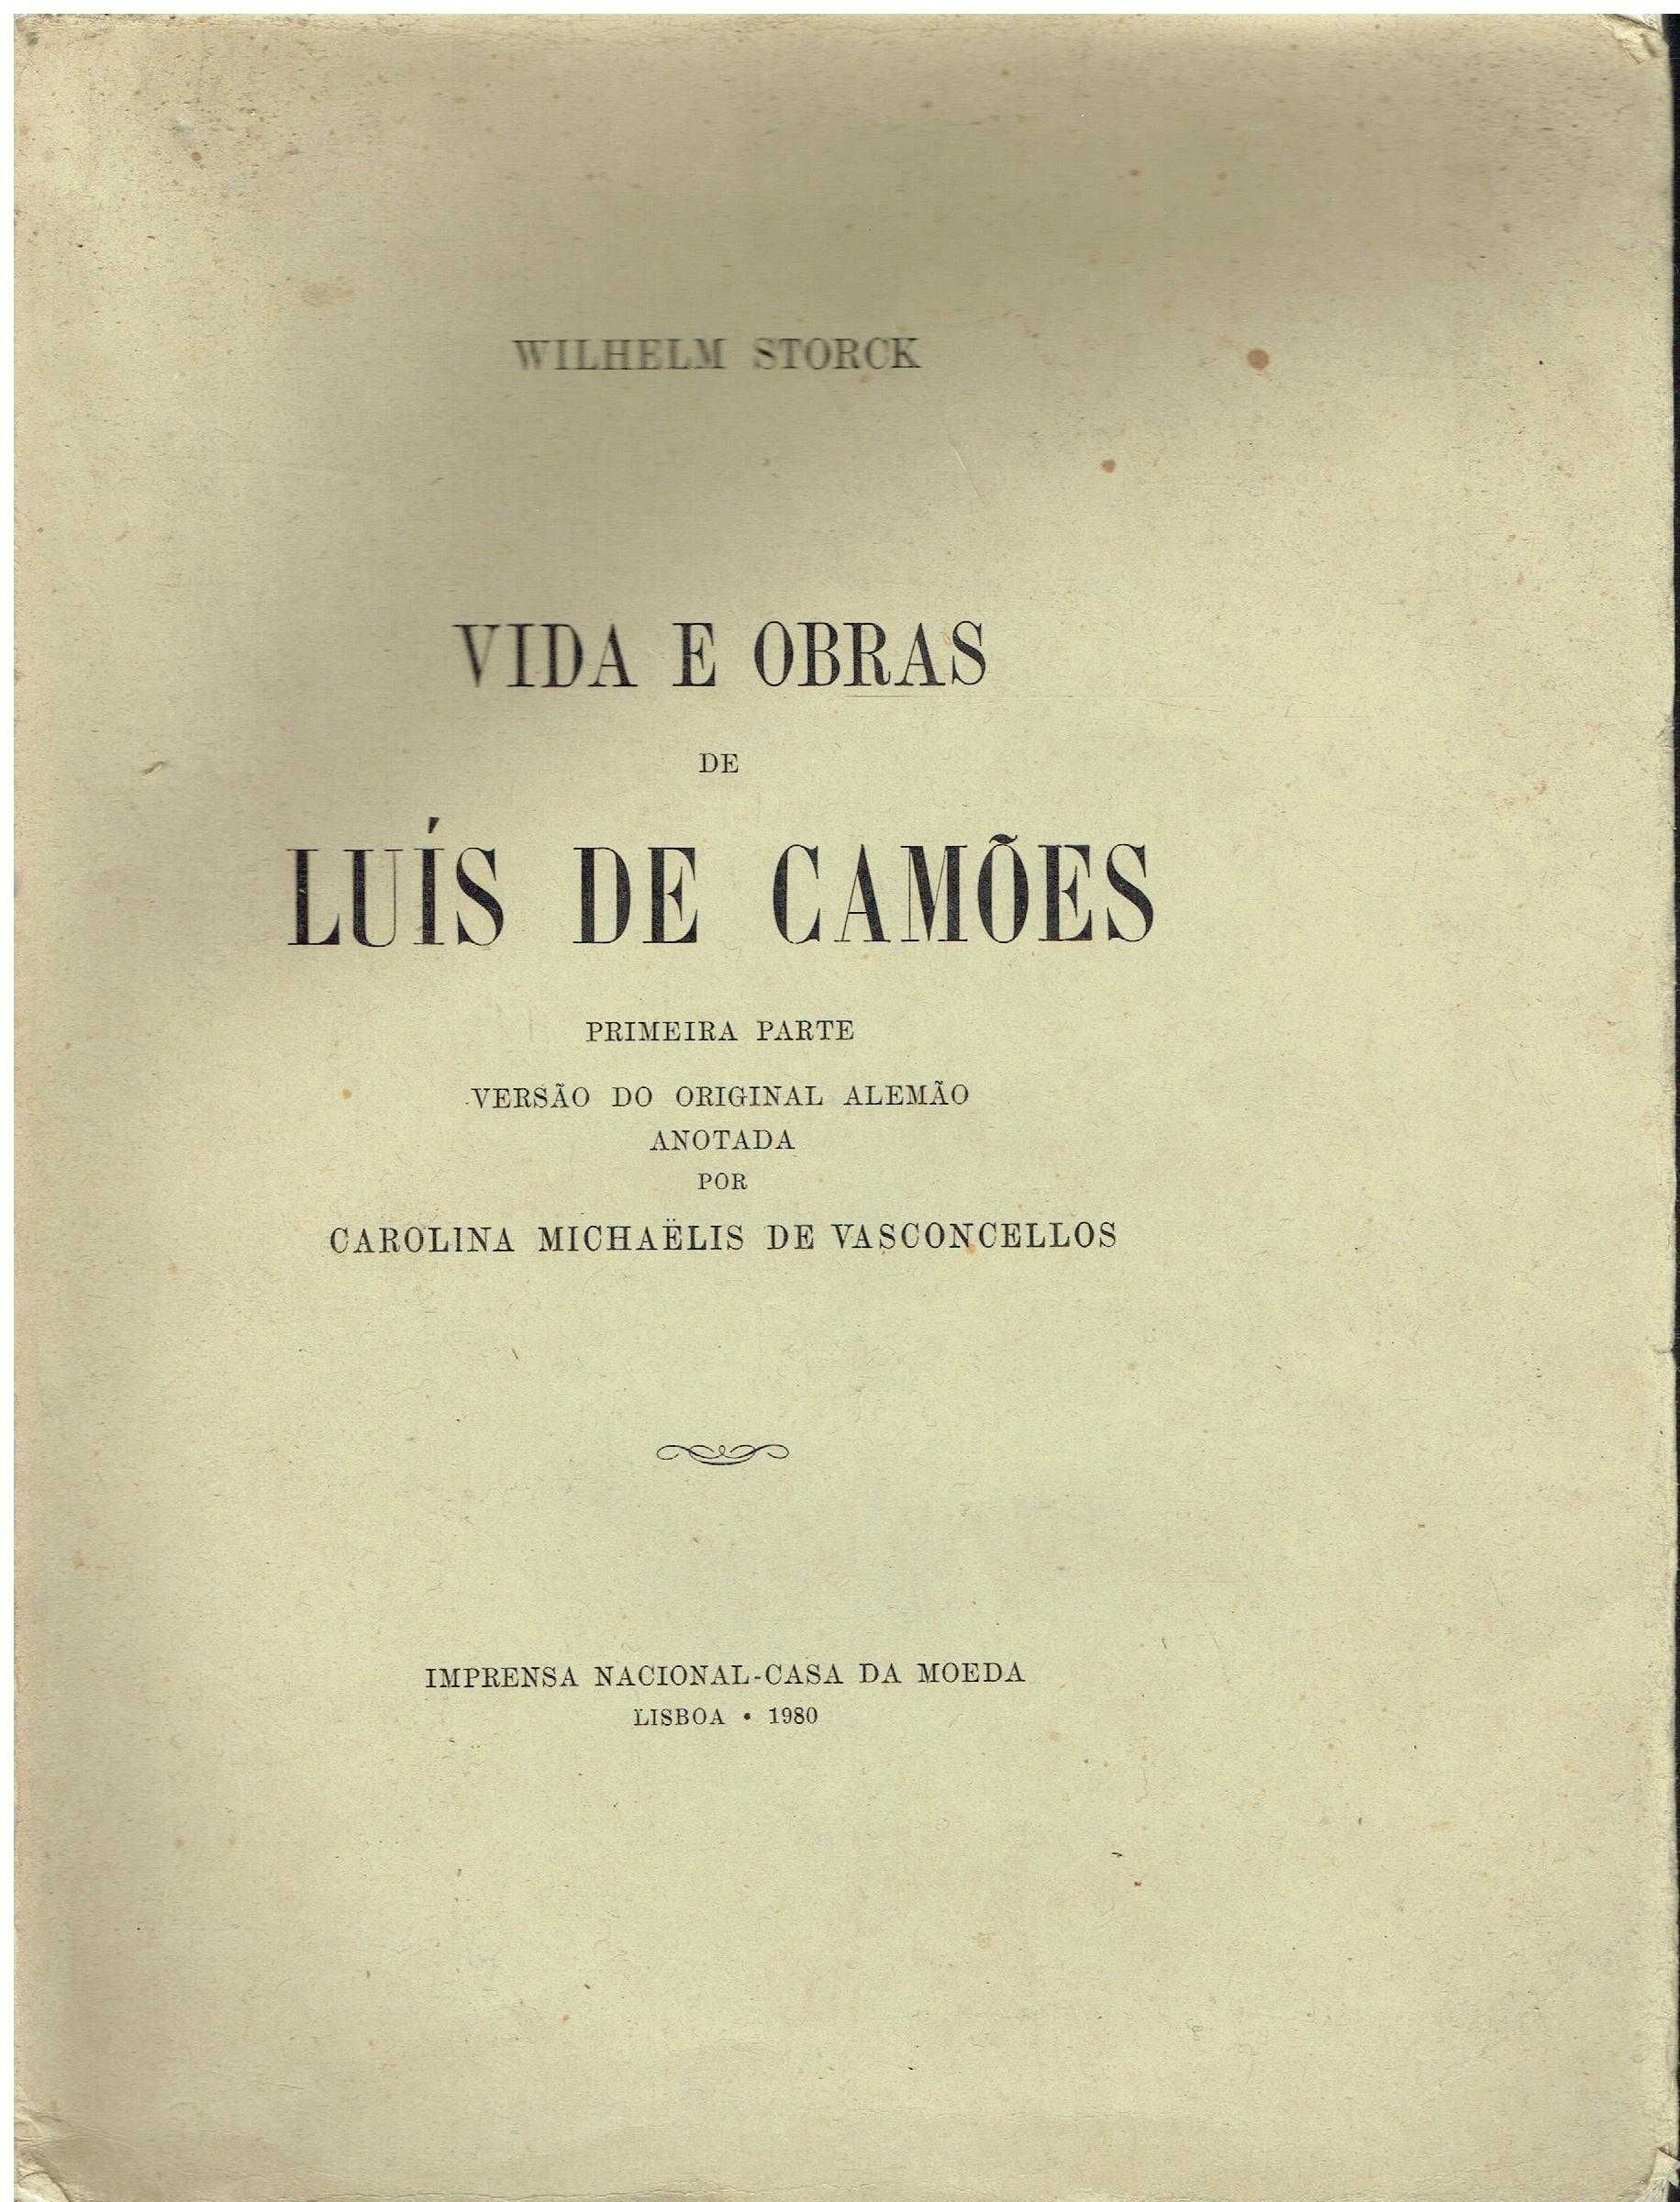 11127

Vida e Obras de Luis de Camões
de Wilhelm Storck